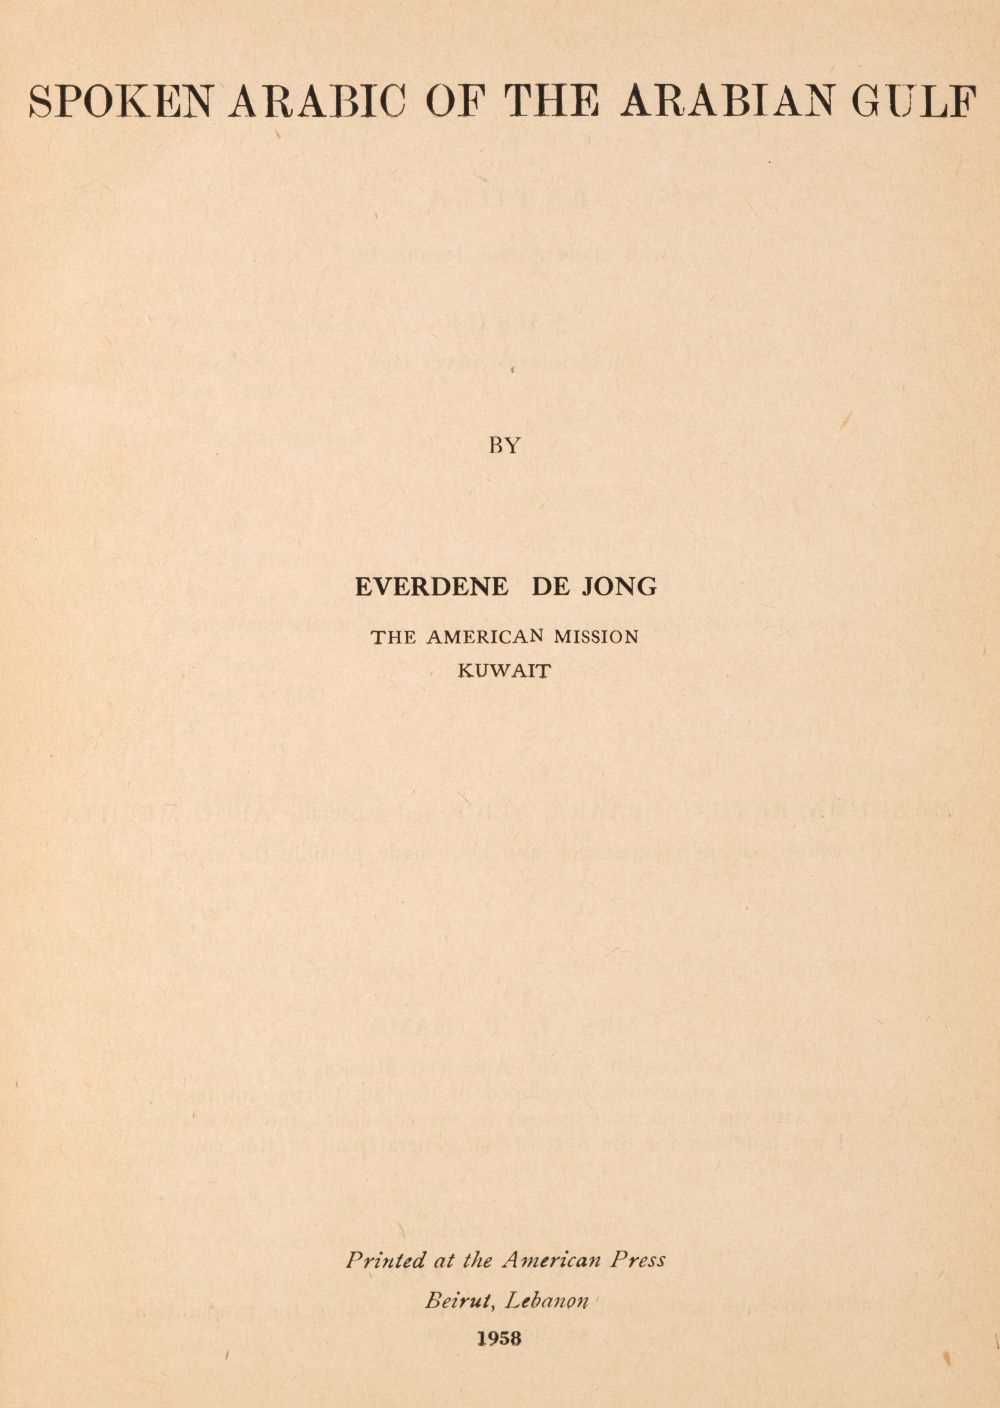 Lot 42 - De Jong (Everdene). Spoken Arabic of the Arabian Gulf, 1st edition, Beirut: The American Press, 1958